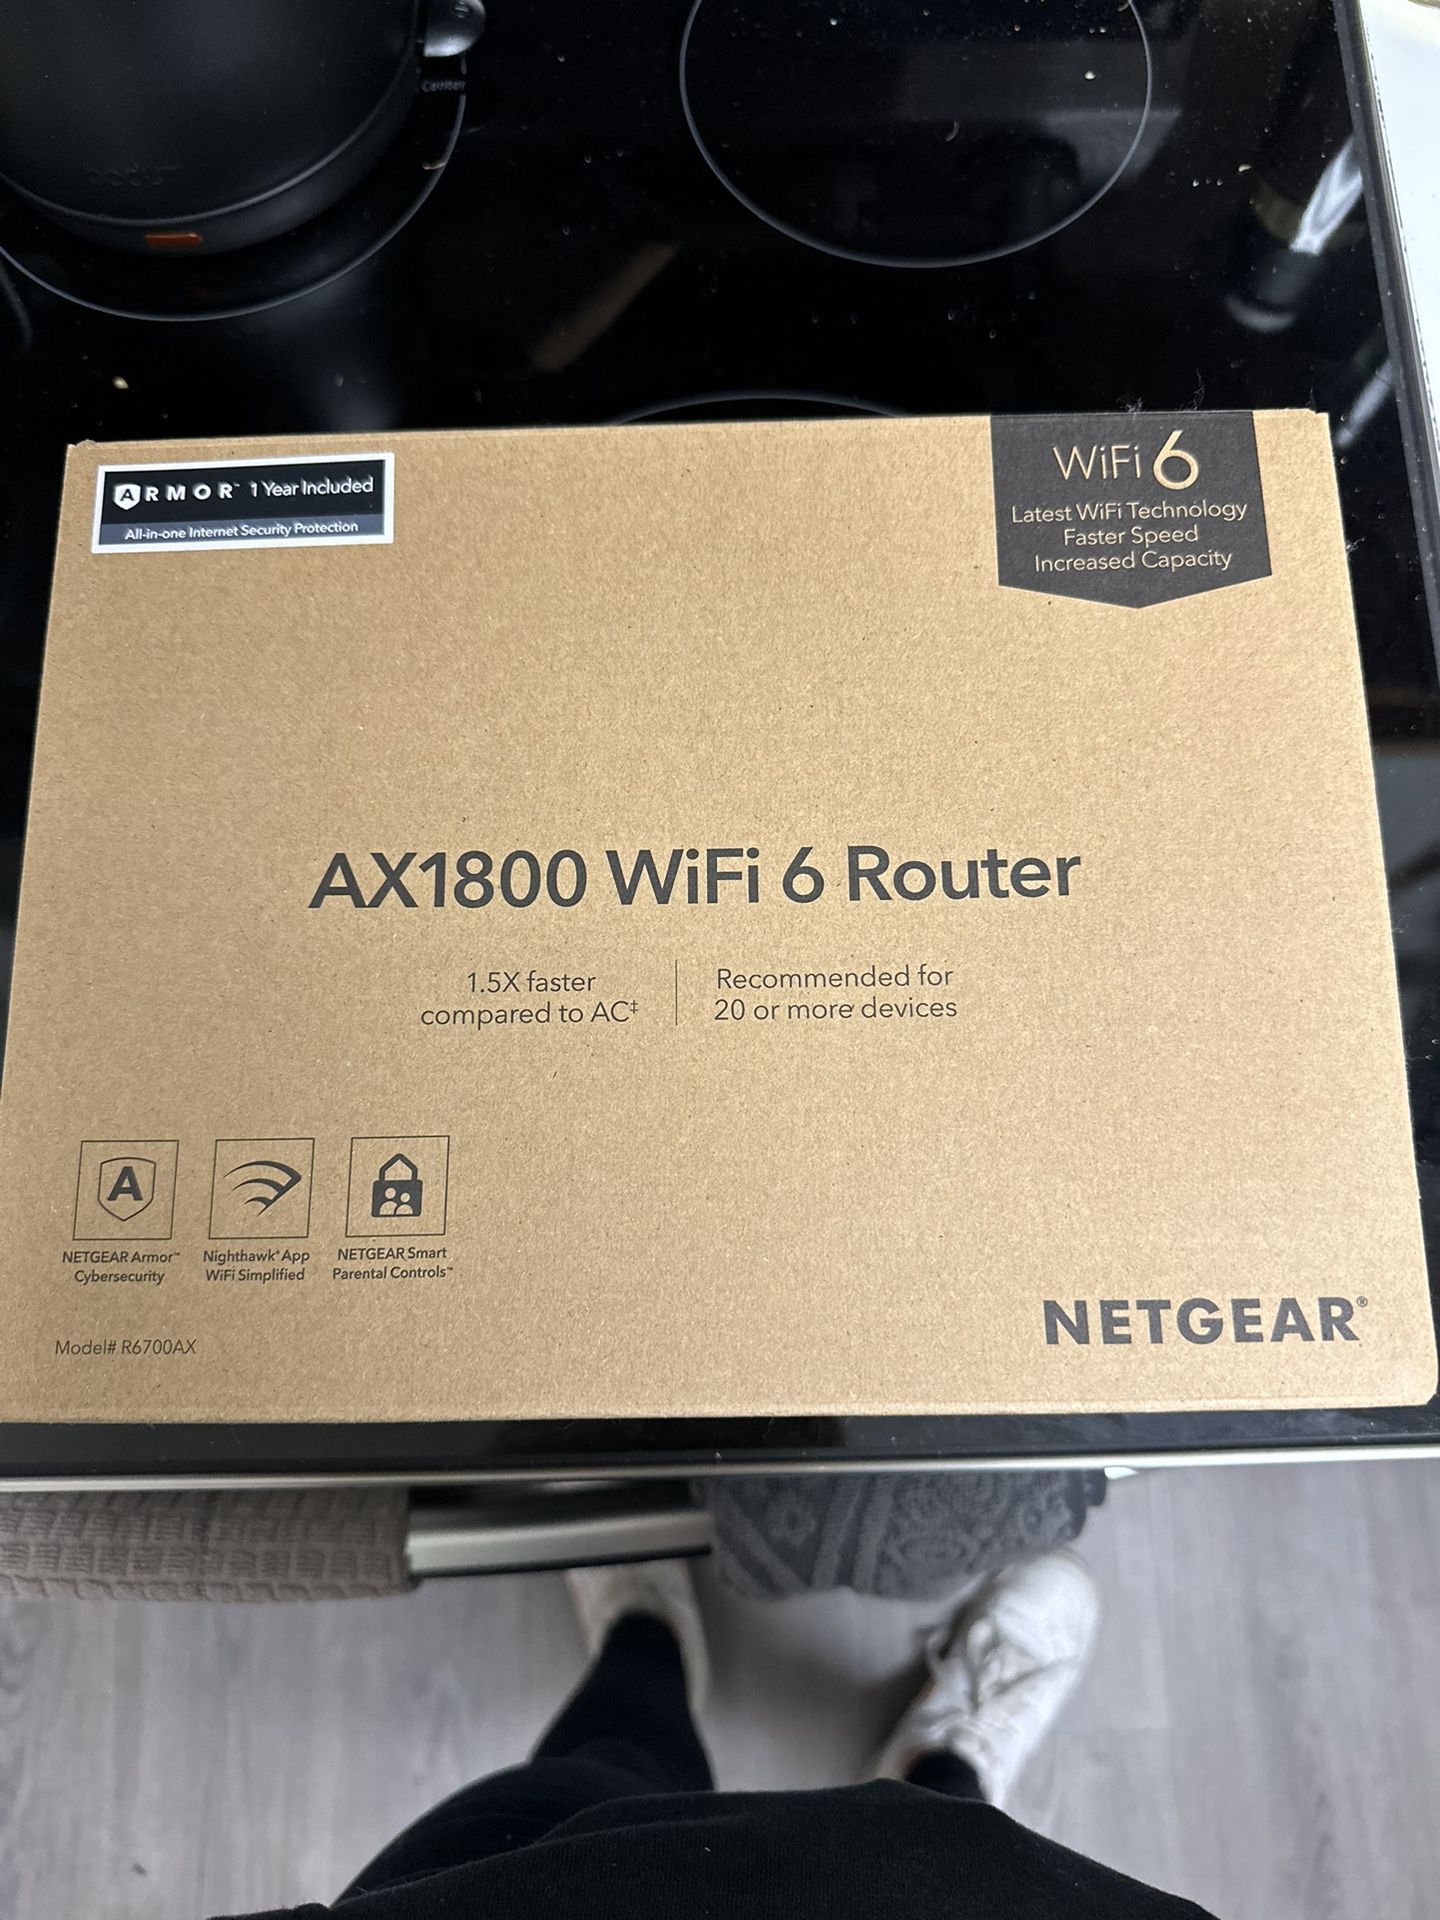 BRAND NEW! Netgear AX1800 WiFi 6 ROUTER w/ 1 Yr Security